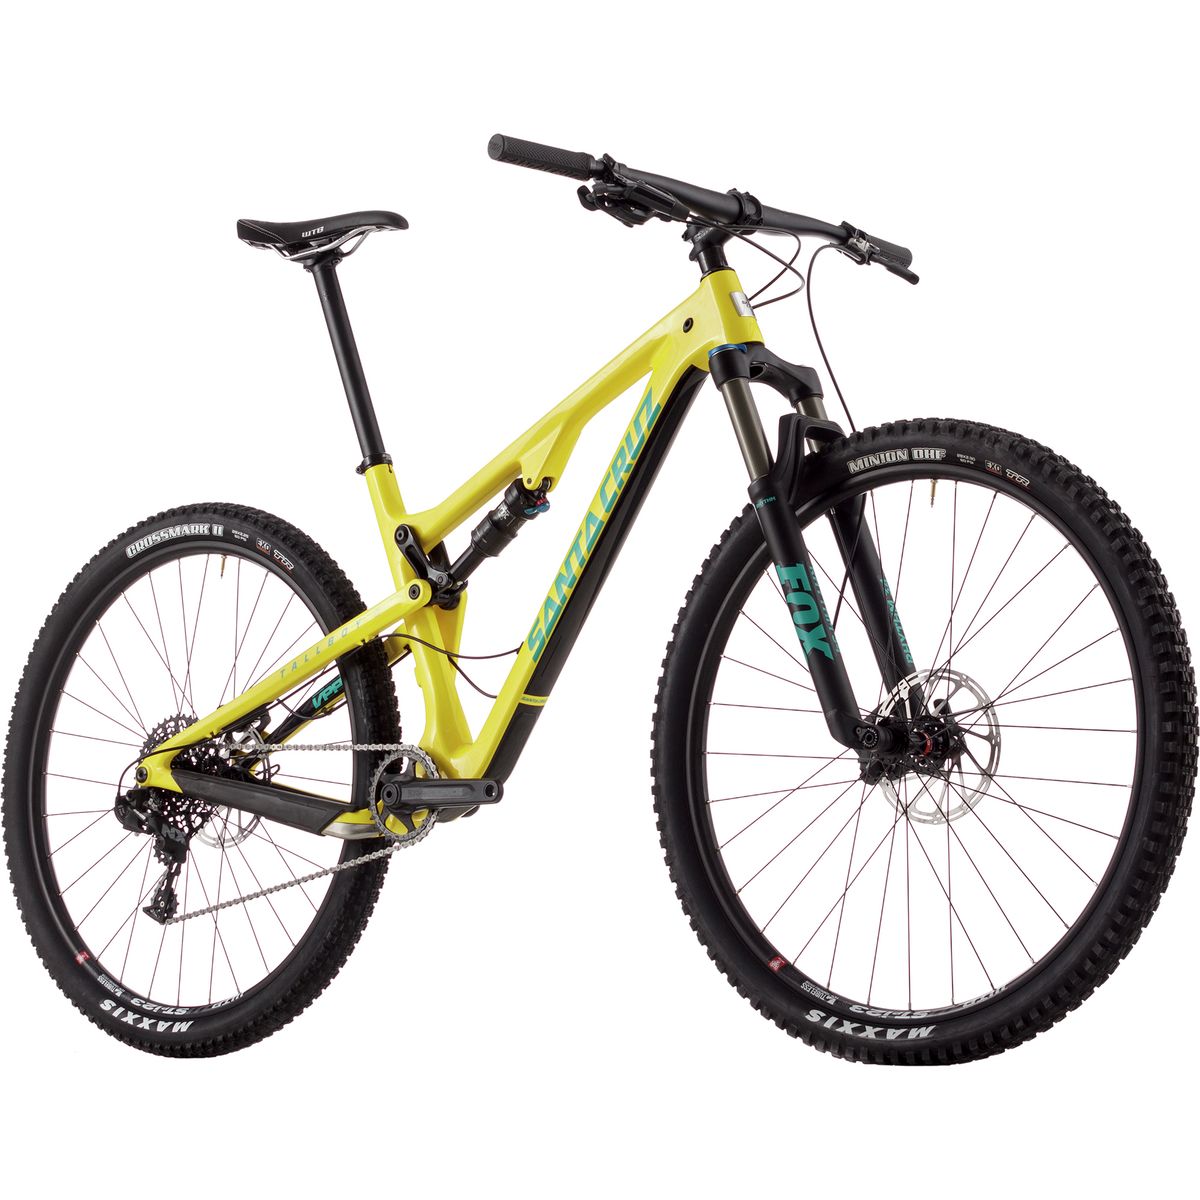 Santa Cruz Bicycles Tallboy Carbon 29 R1x Complete Mountain Bike 2017